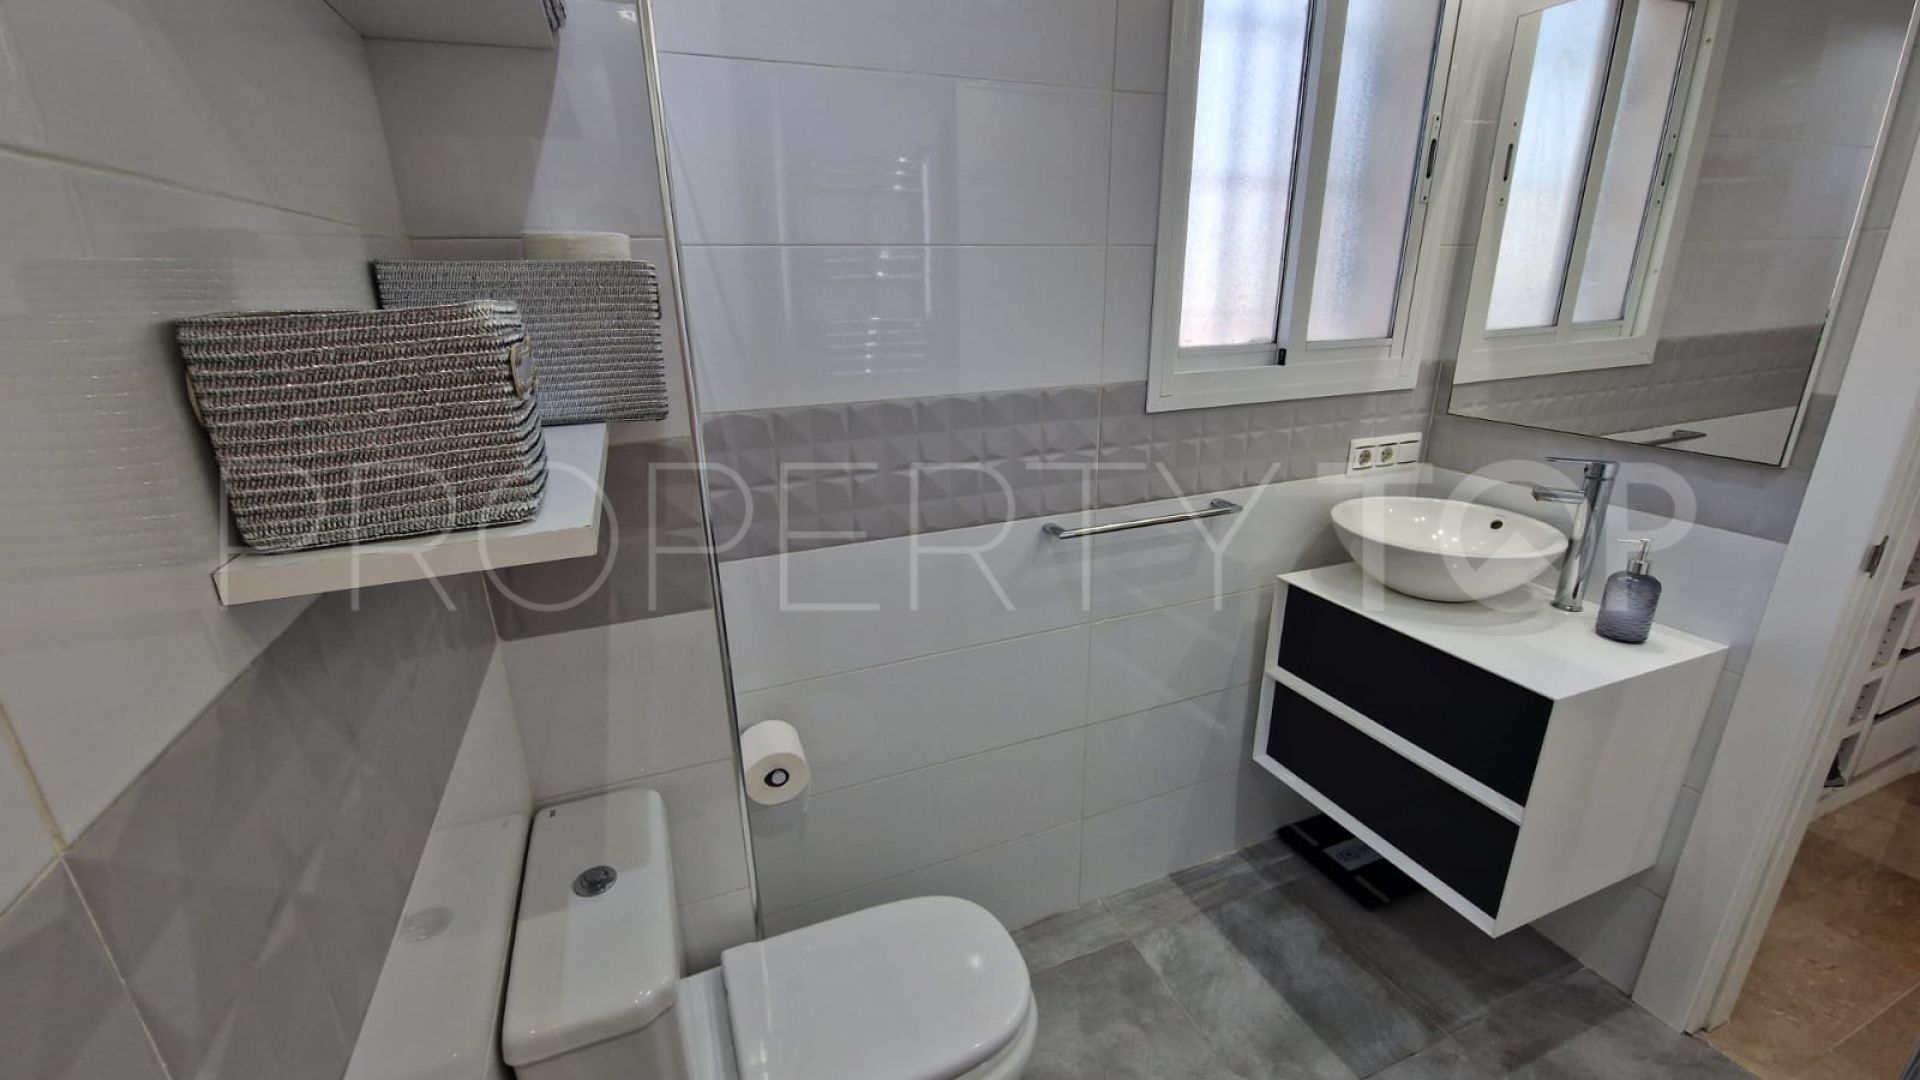 2 bedrooms duplex penthouse in Avda de Andalucia - Sierra de Estepona for sale